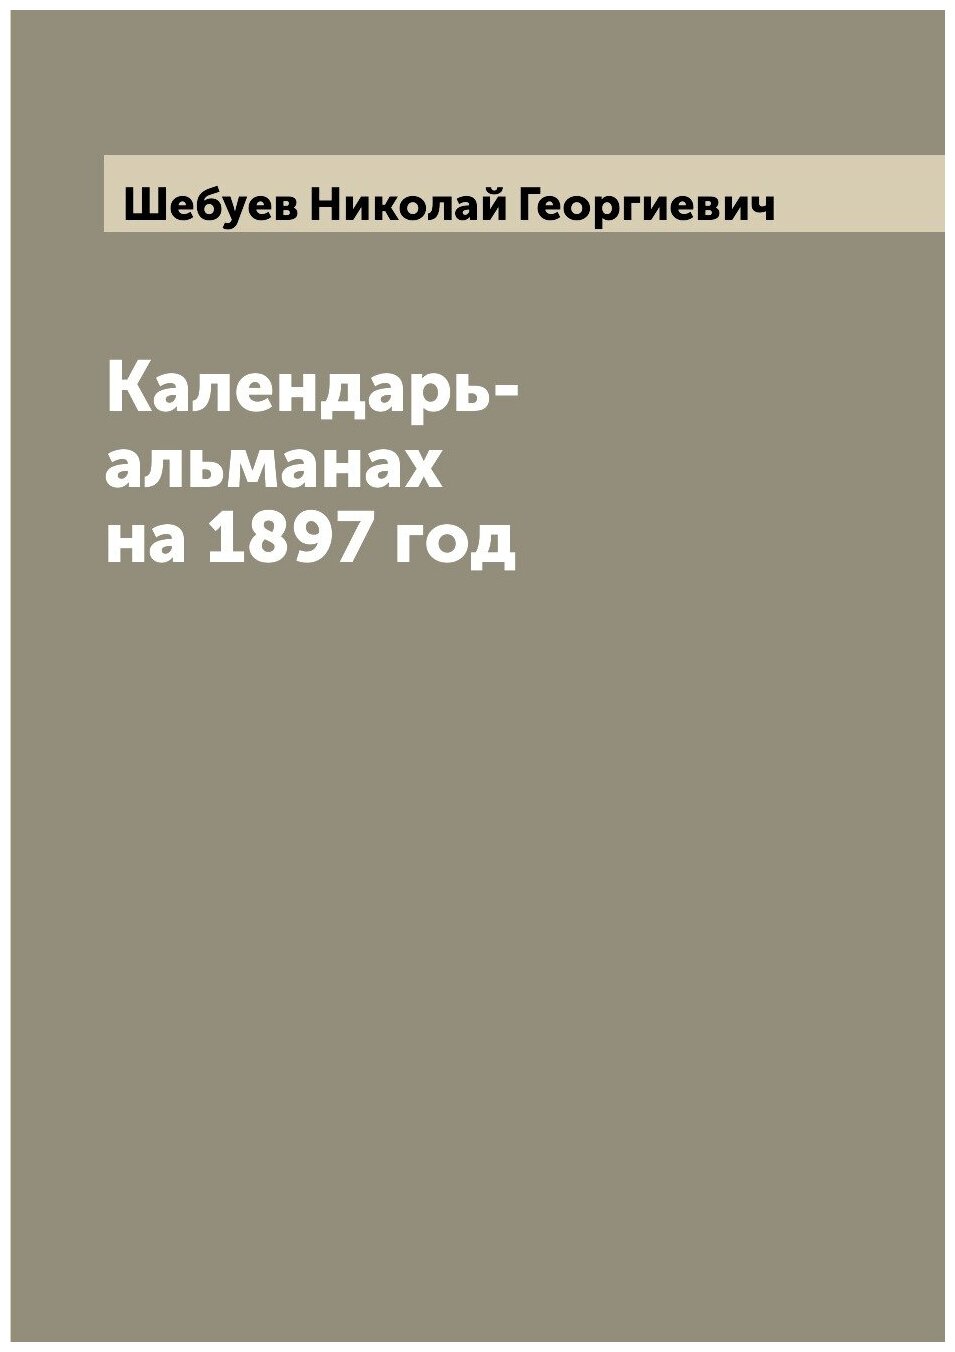 Календарь-альманах на 1897 год